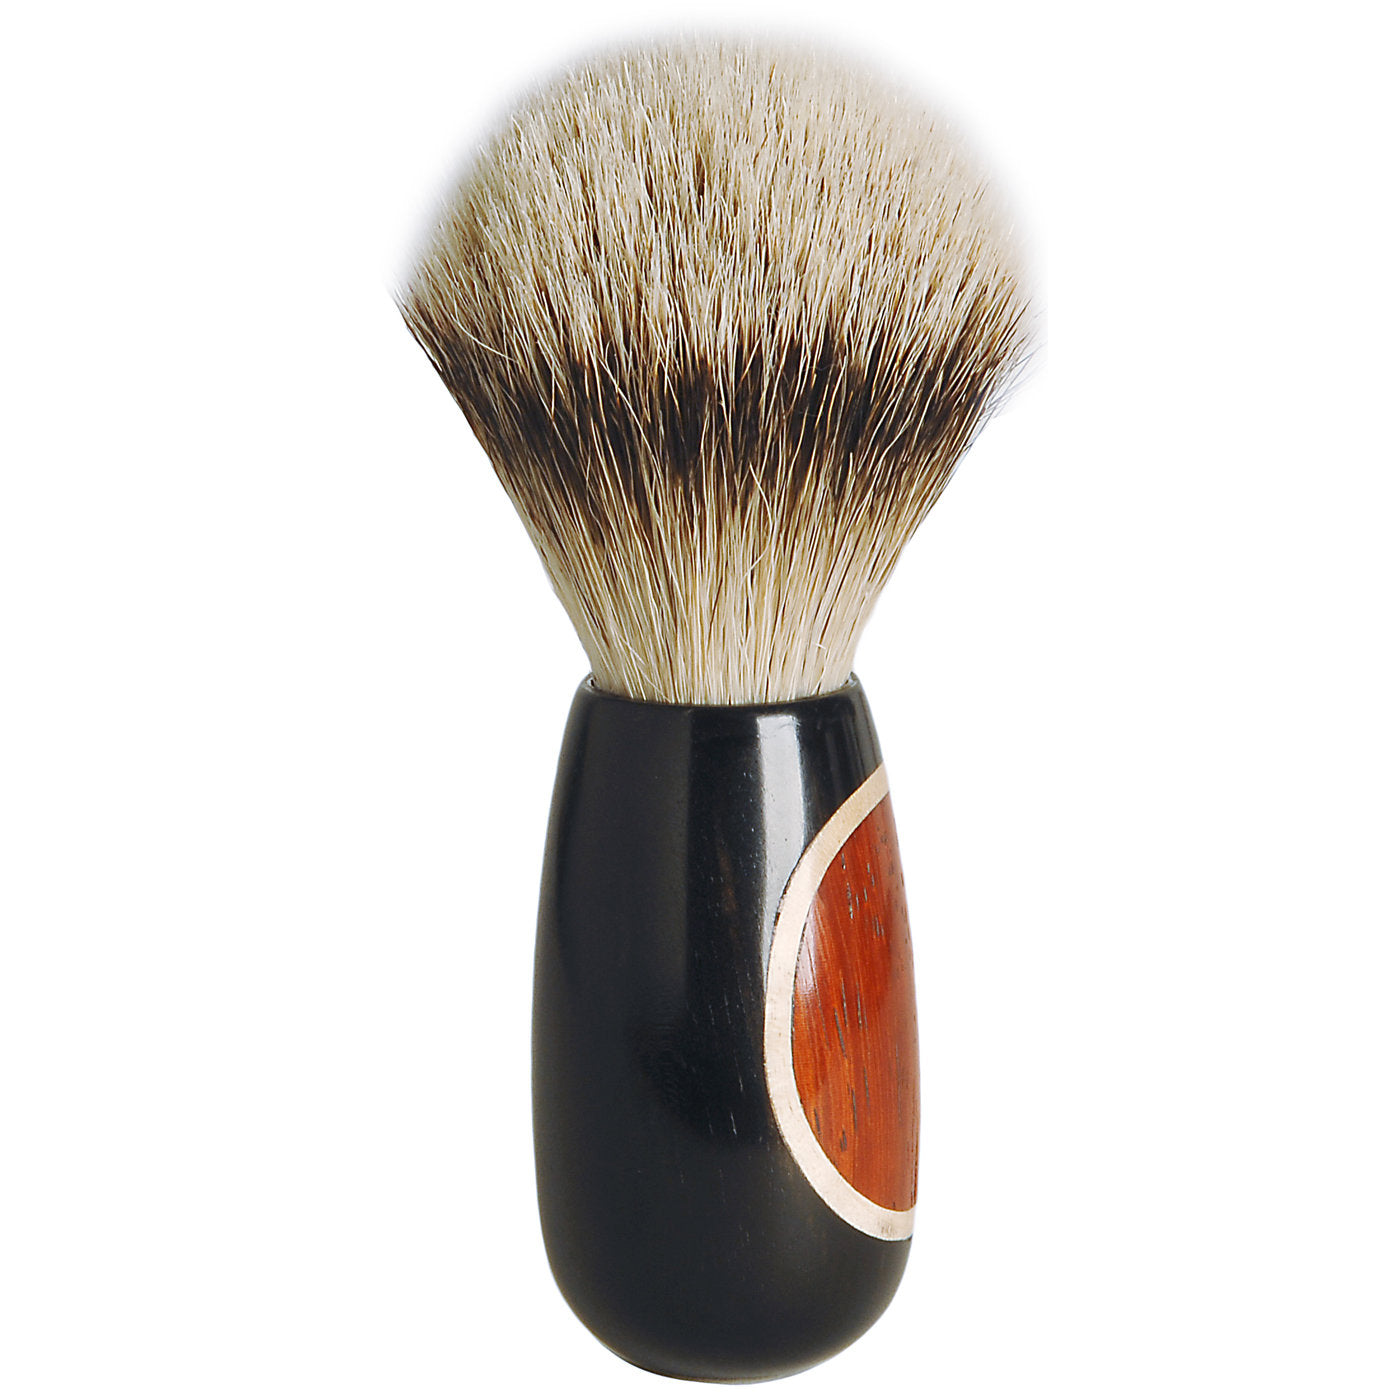 Oval Shaving Brush in Ebony, Padauk and Maple Wood - Alternative view 1